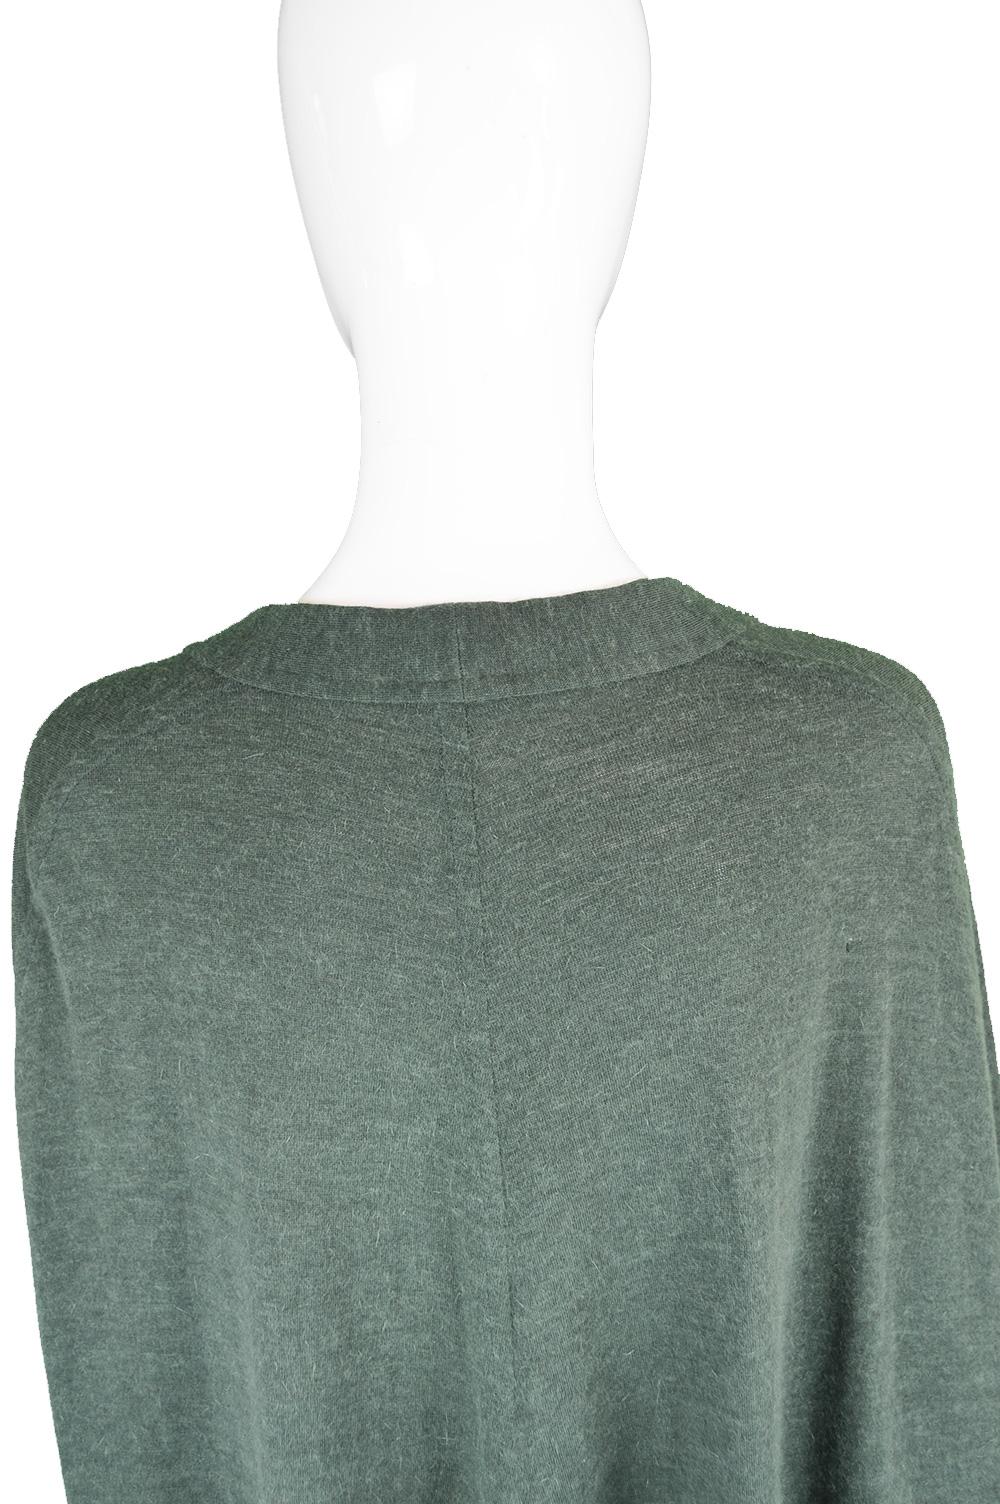 Lanvin Haute Couture Unstructured Green Wool Knit Maxi Cape Cloak, 1970s For Sale 5